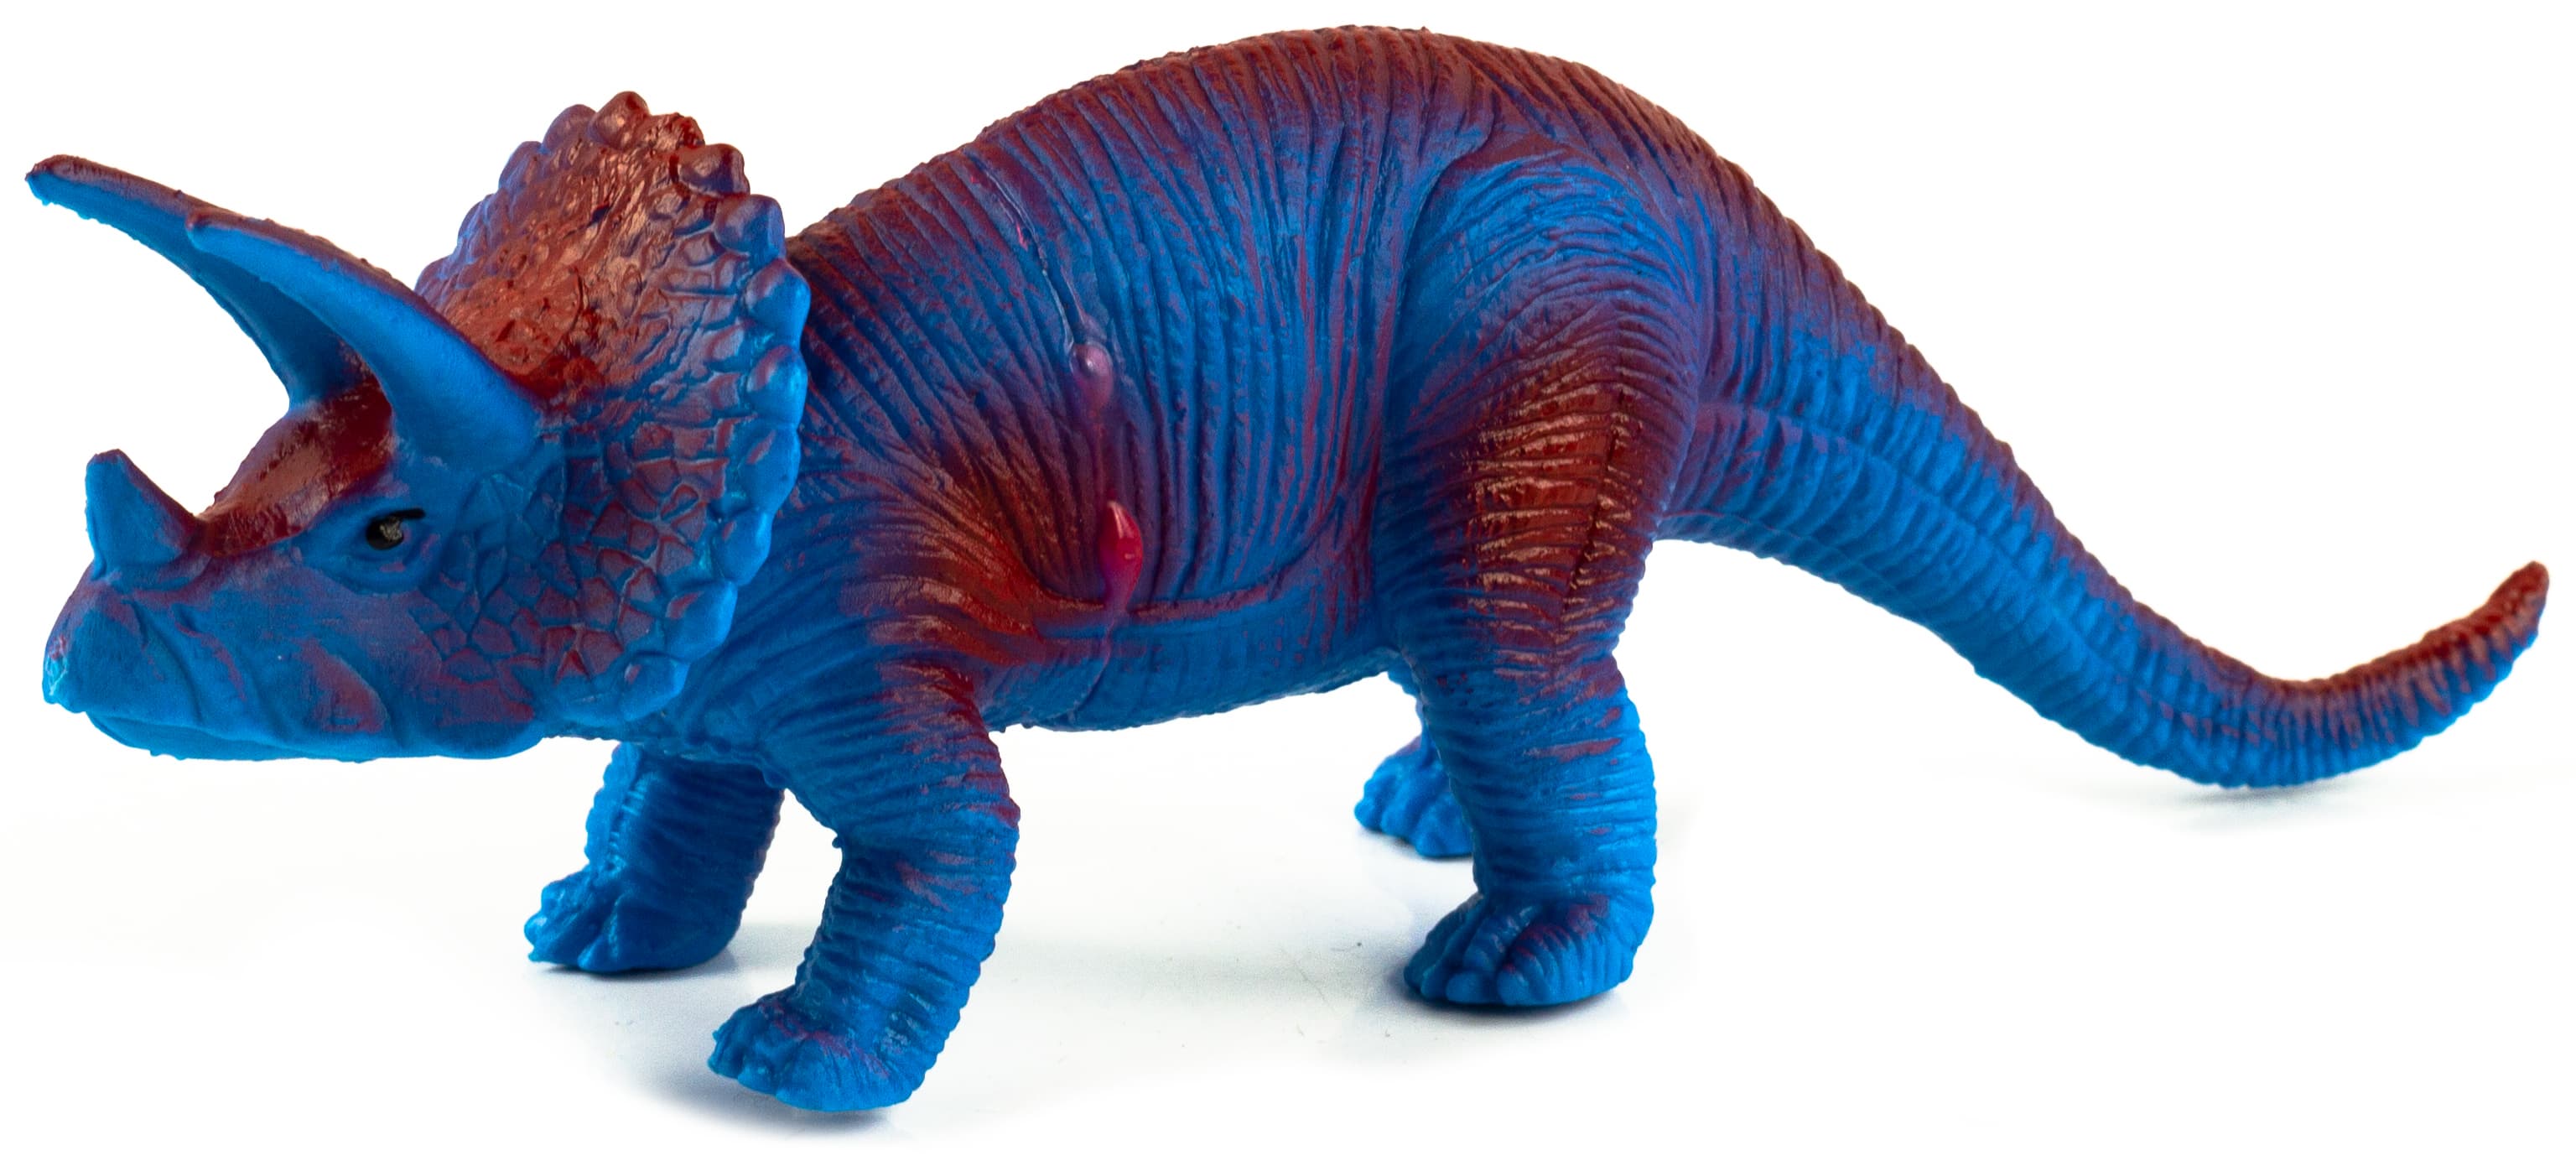 Фигурка «Динозавр» 10-13 см., H384 Dino World / 1 шт.